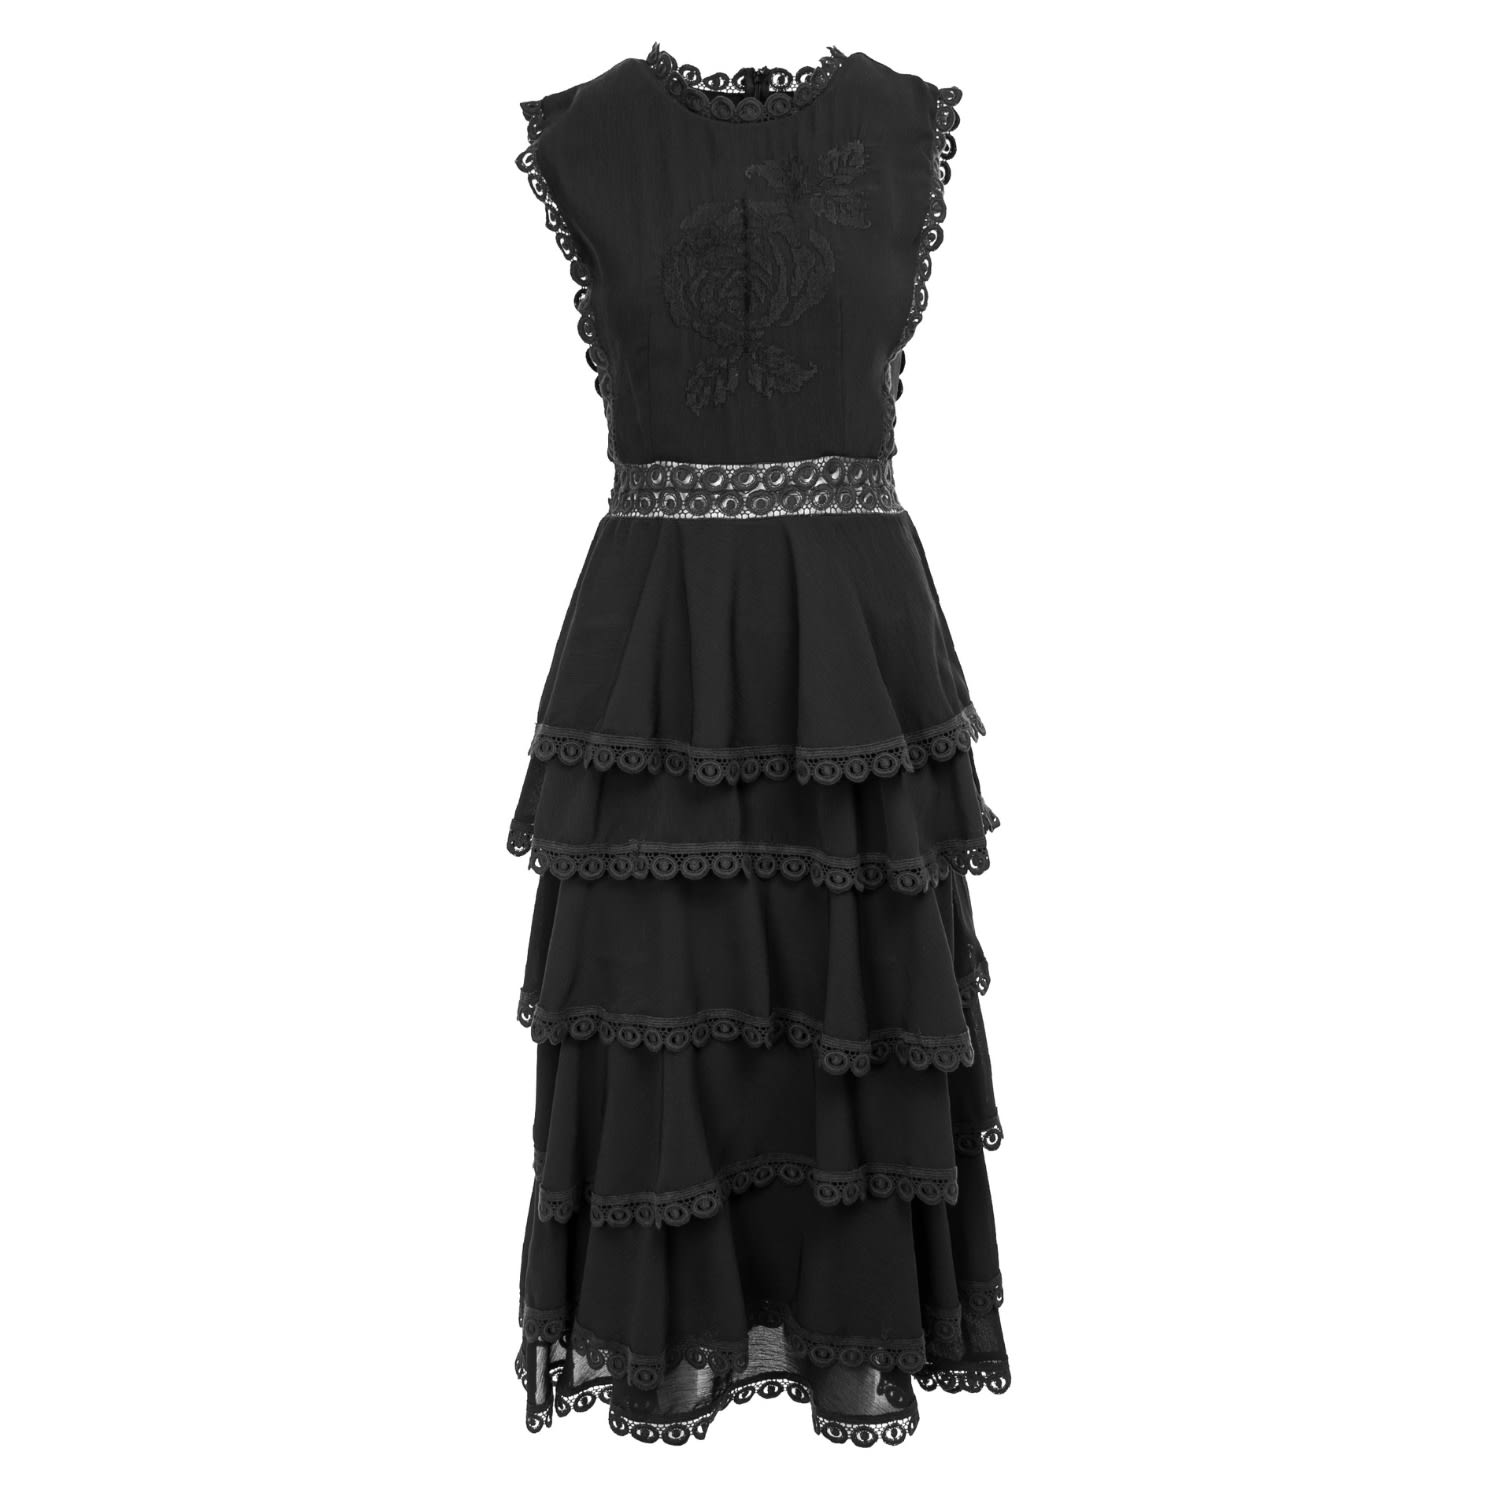 Women’s Long Black Dress With Ruffles And Lace Appliqué Large Izabela Mandoiu